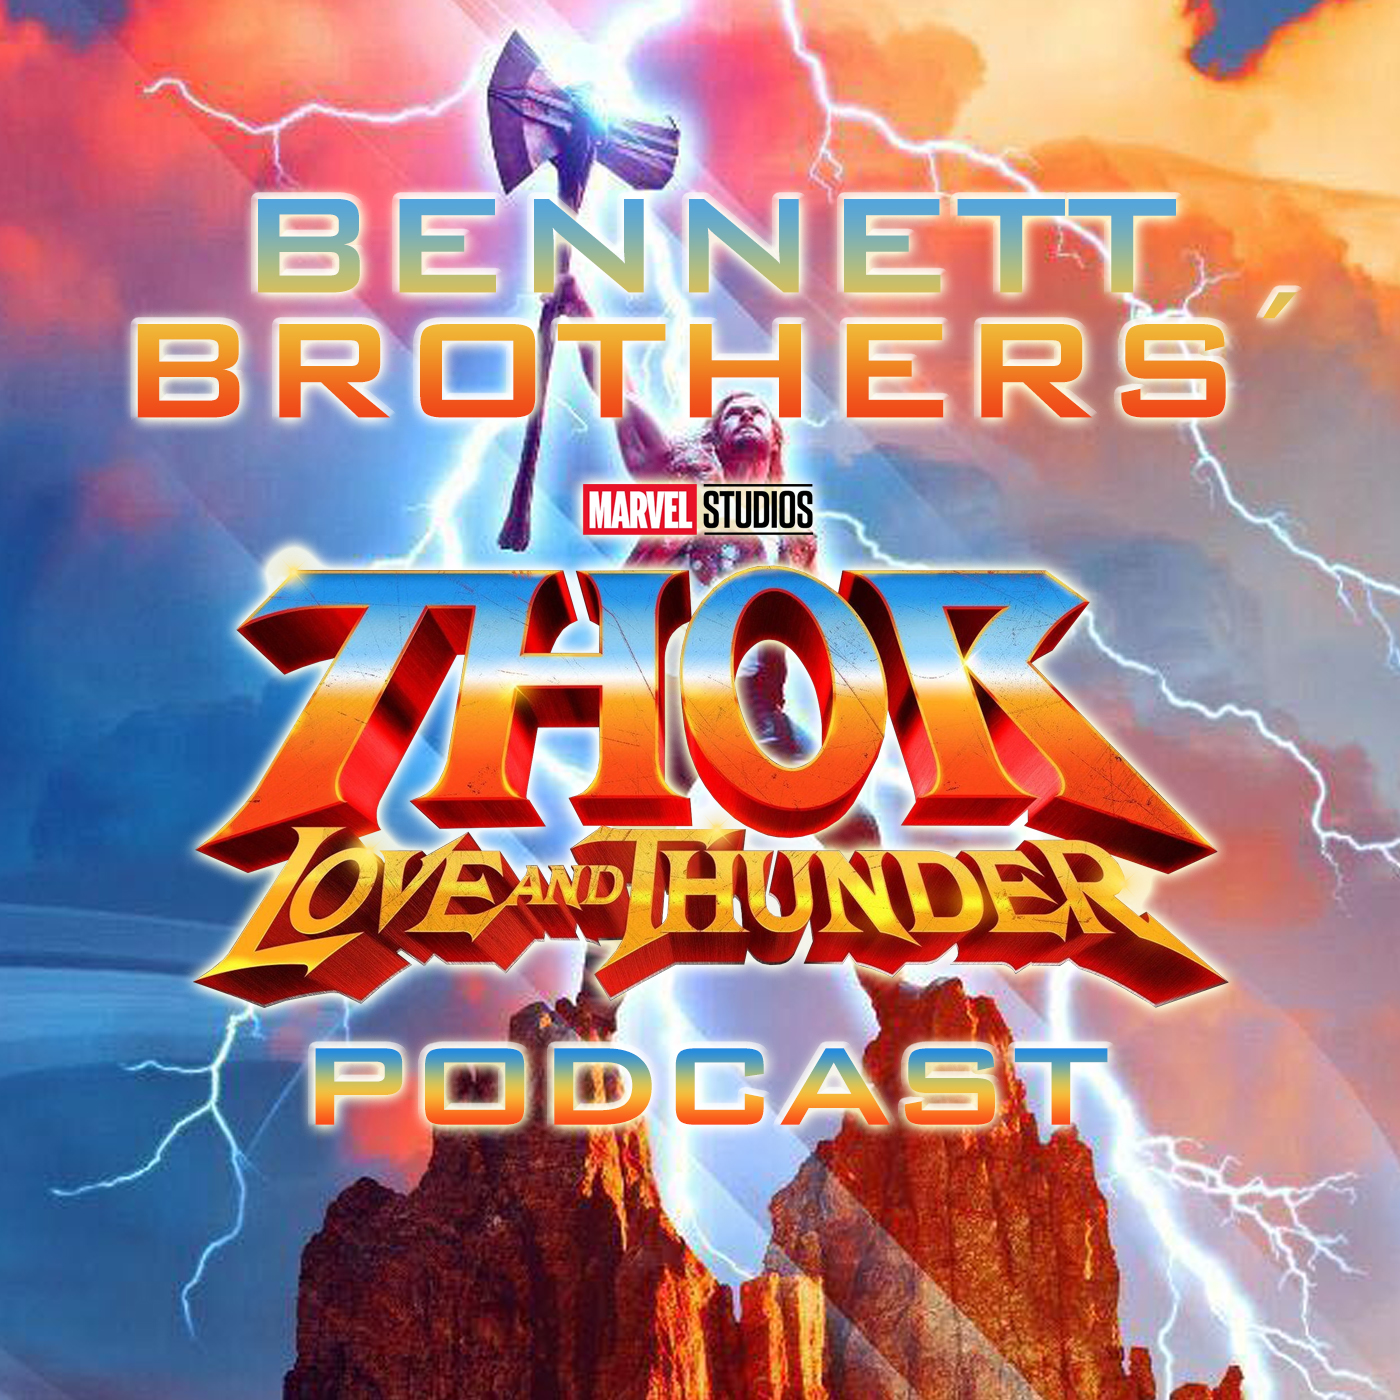 Thor 4 logo